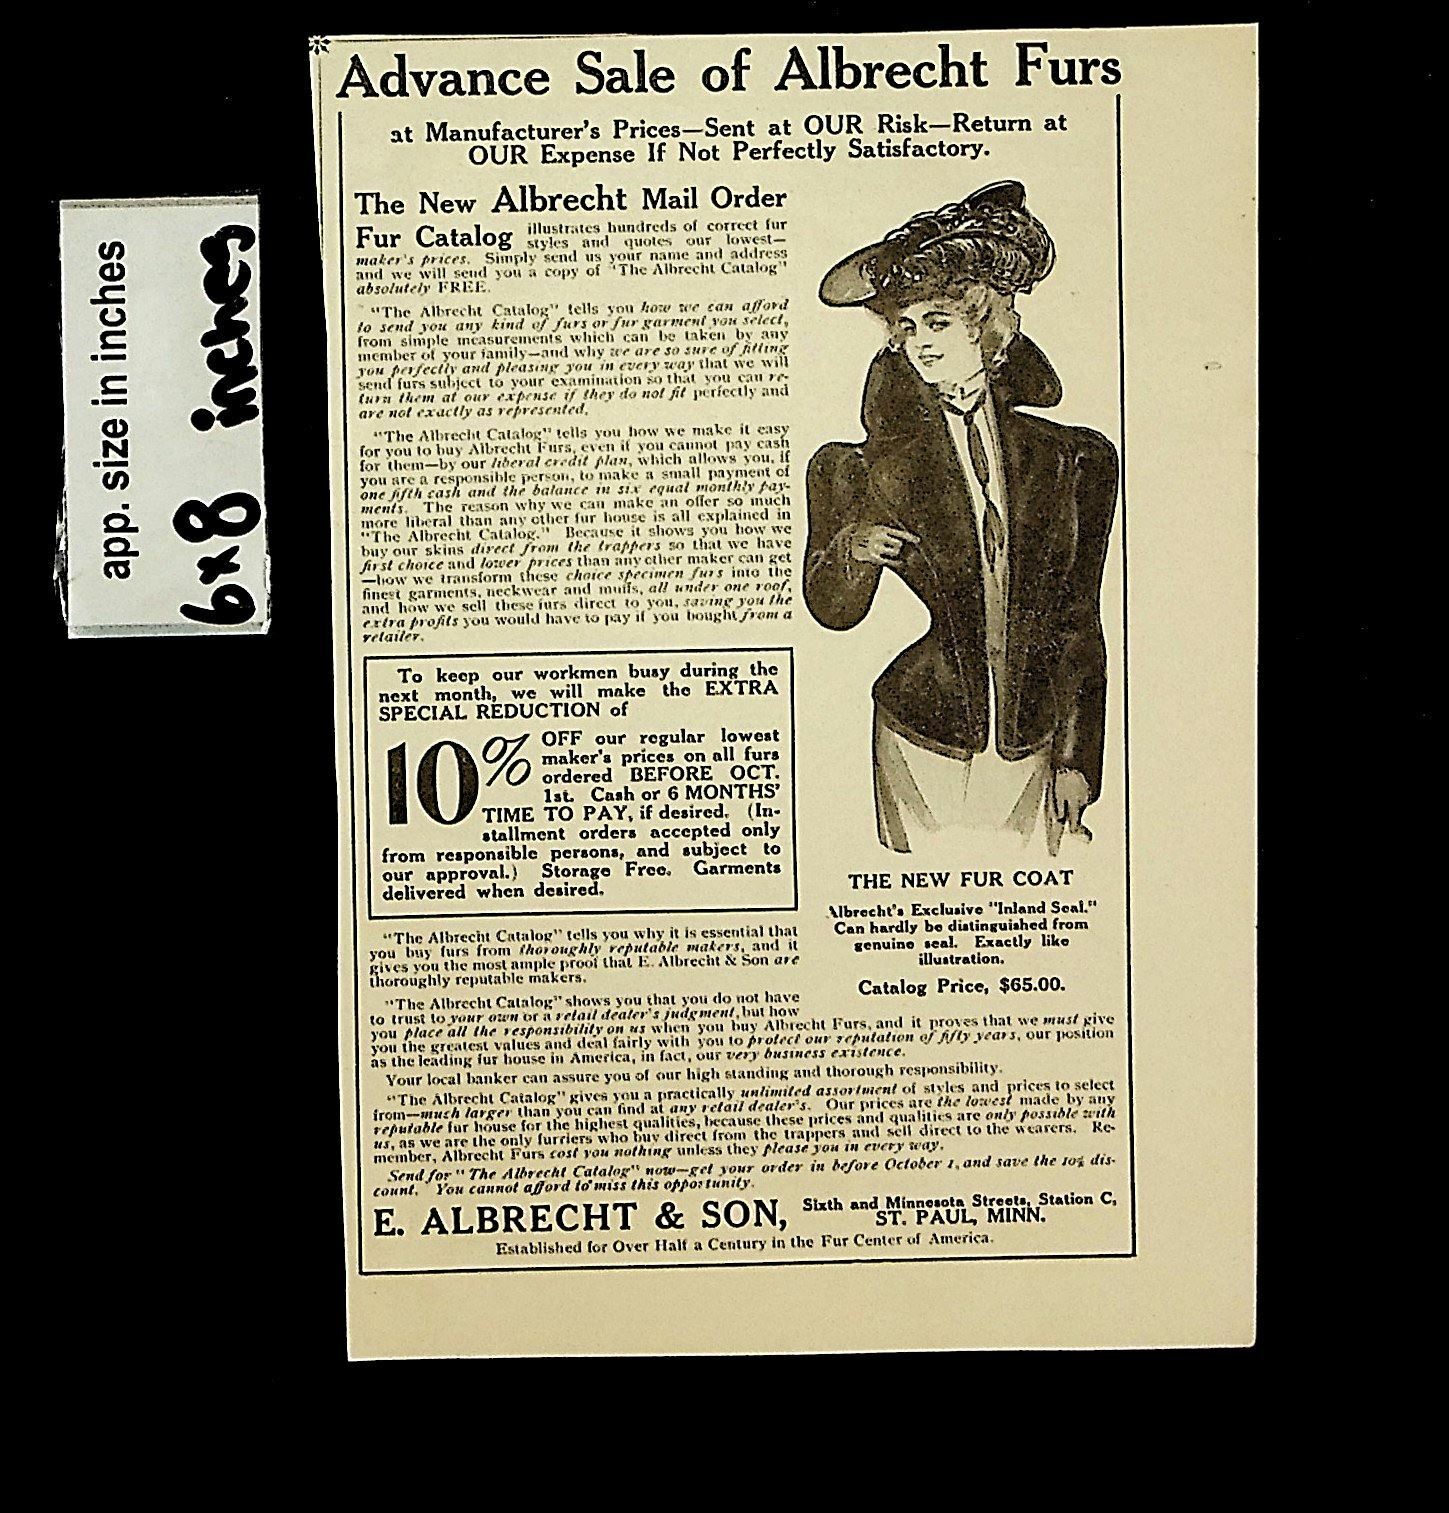 1906 Advance Sale of Albrecht Furs Vintage Print Ad 13750